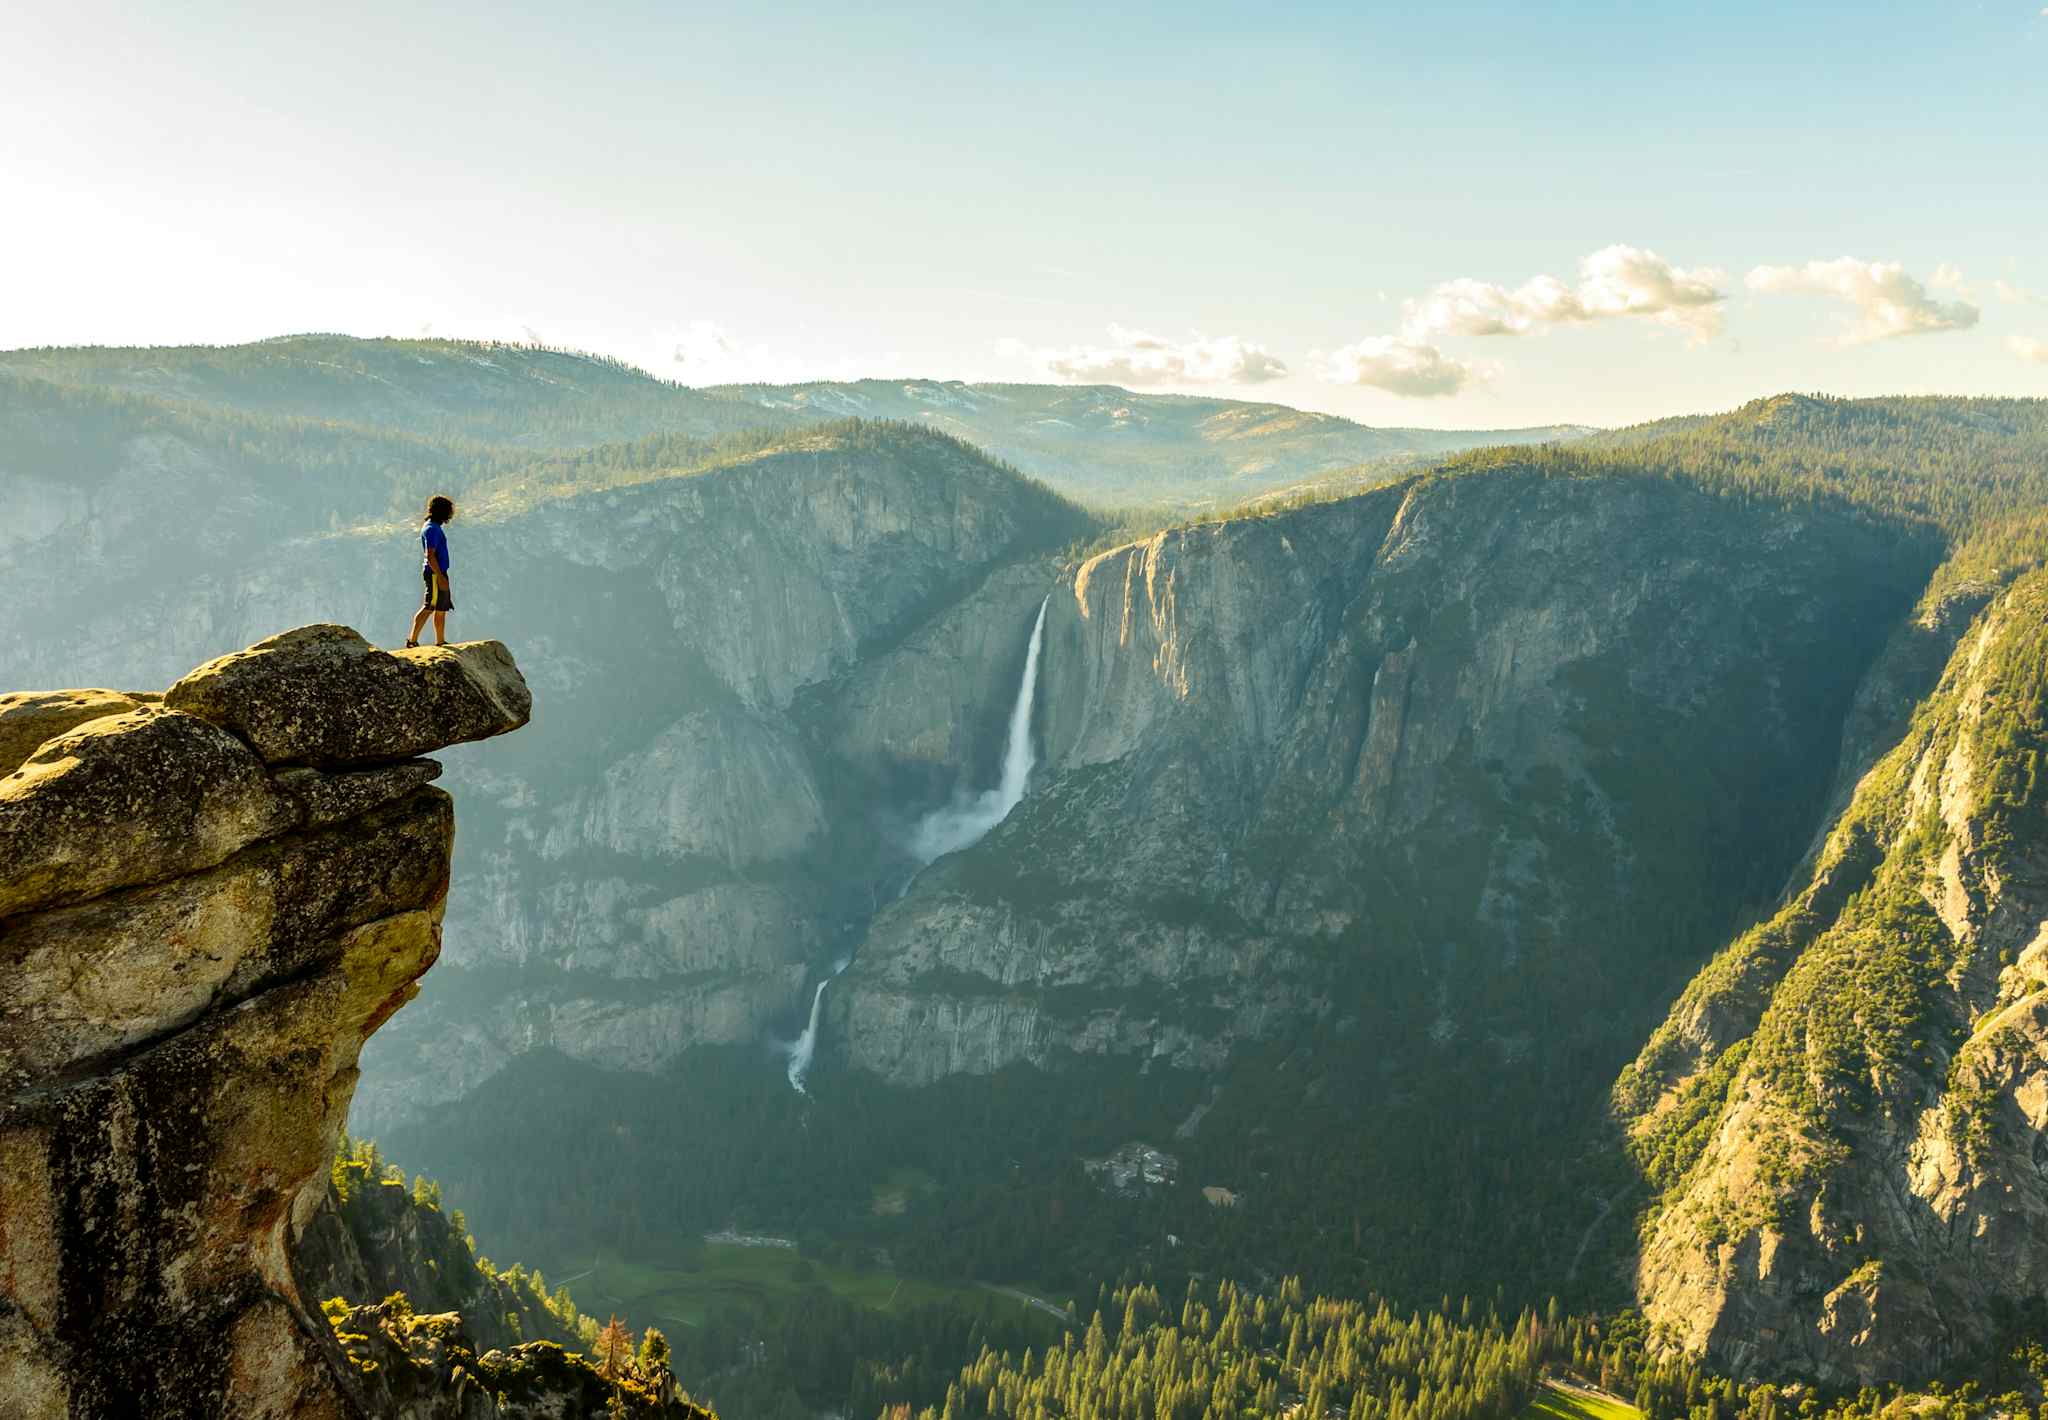 Yosemite National Park, USA
Shutterstock: 754753498
